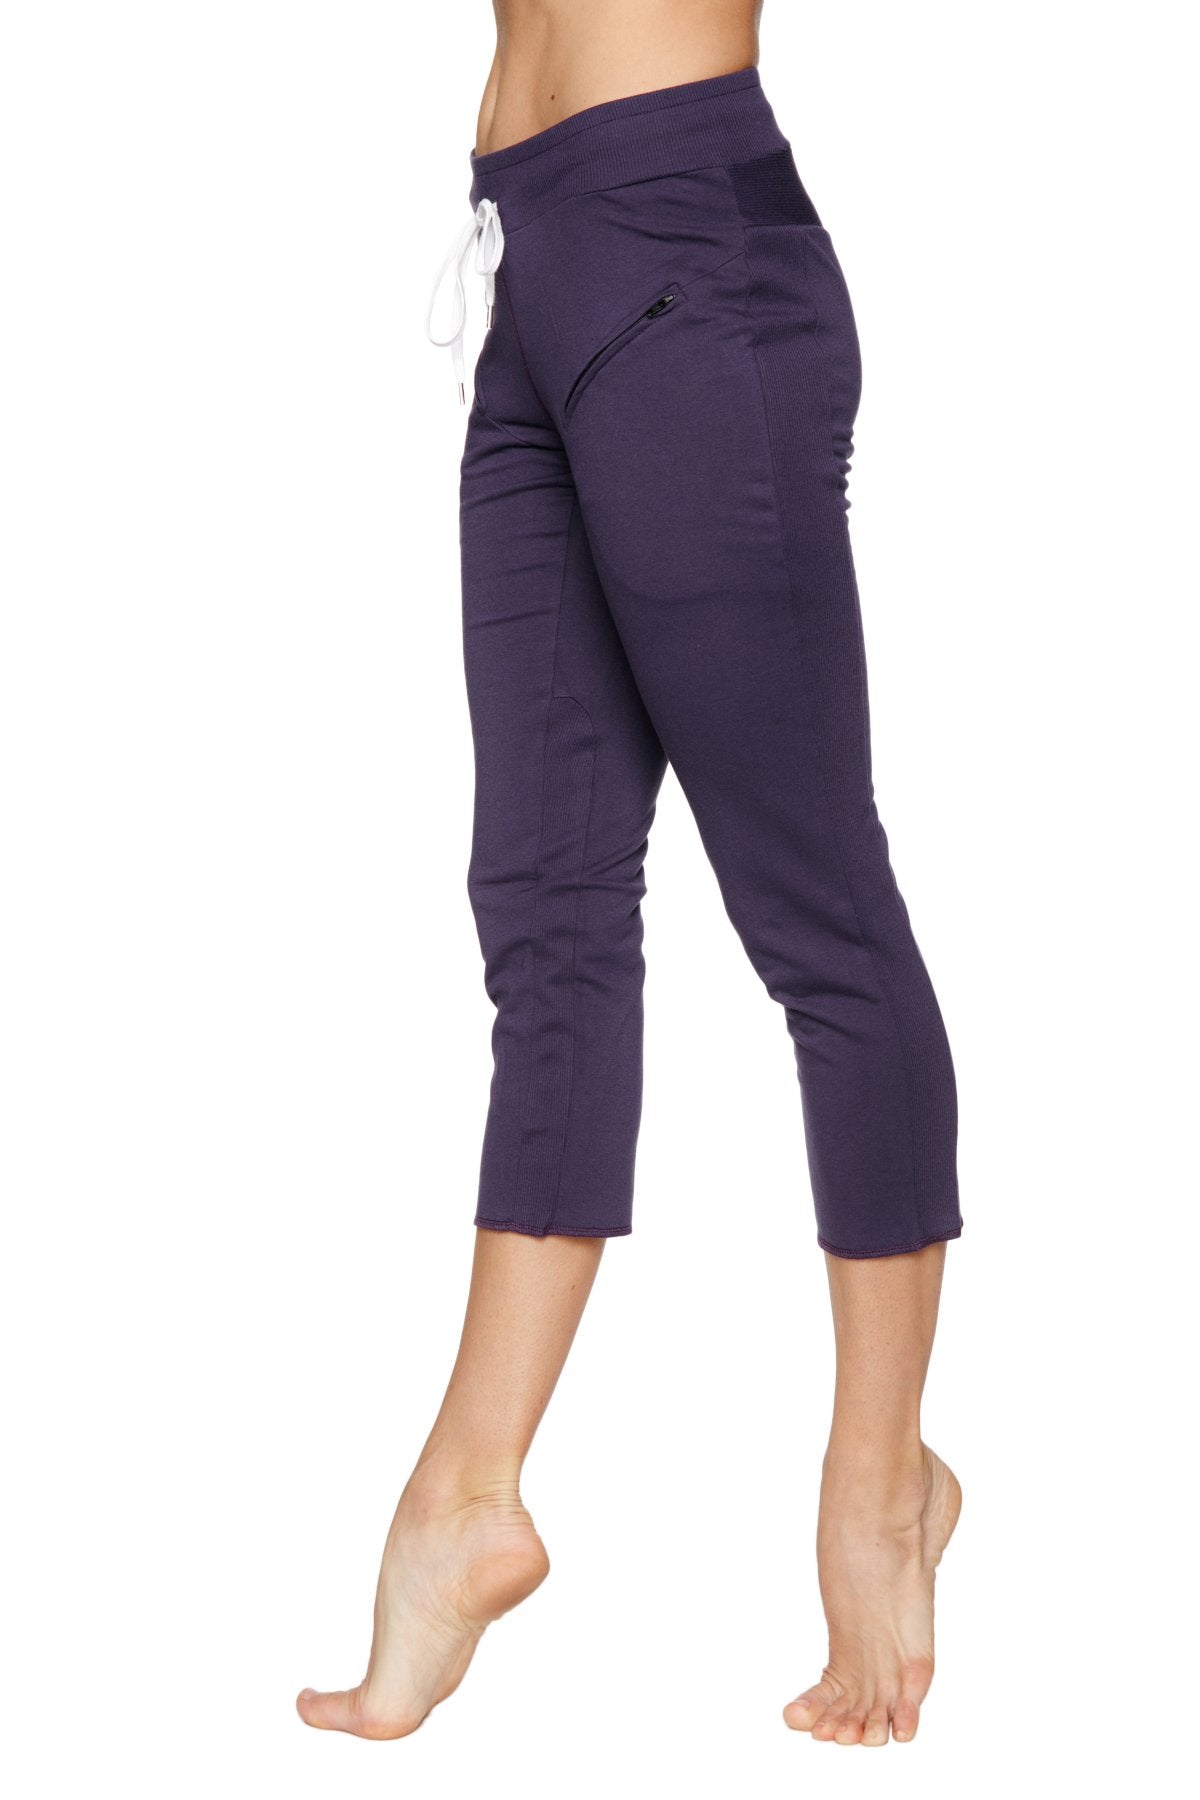 Women's 4/5 Length Zipper Pocket Capri Yoga Pant (Eggplant) by 4